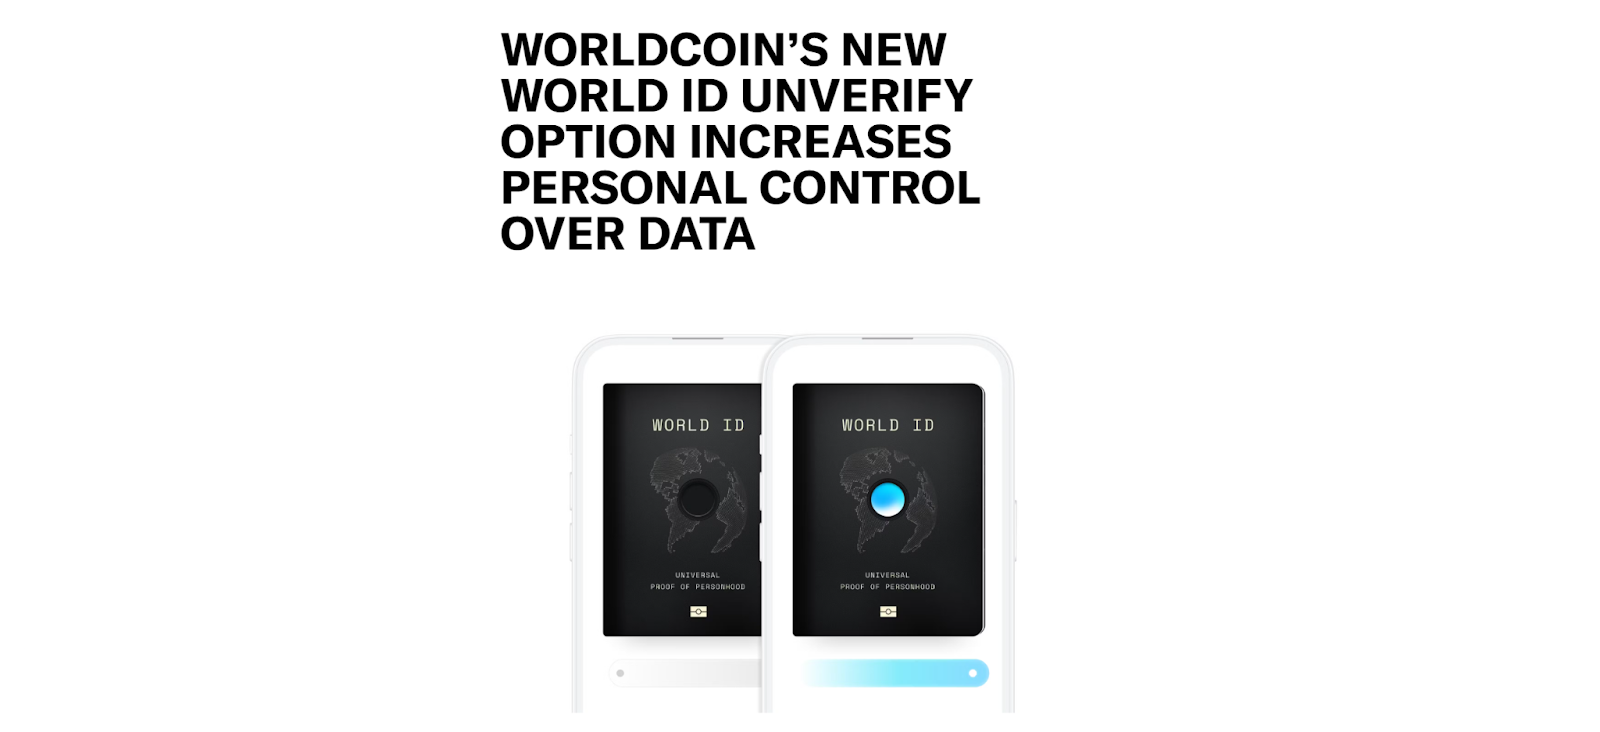 Worldcoin’s New World ID Unverify Option. 